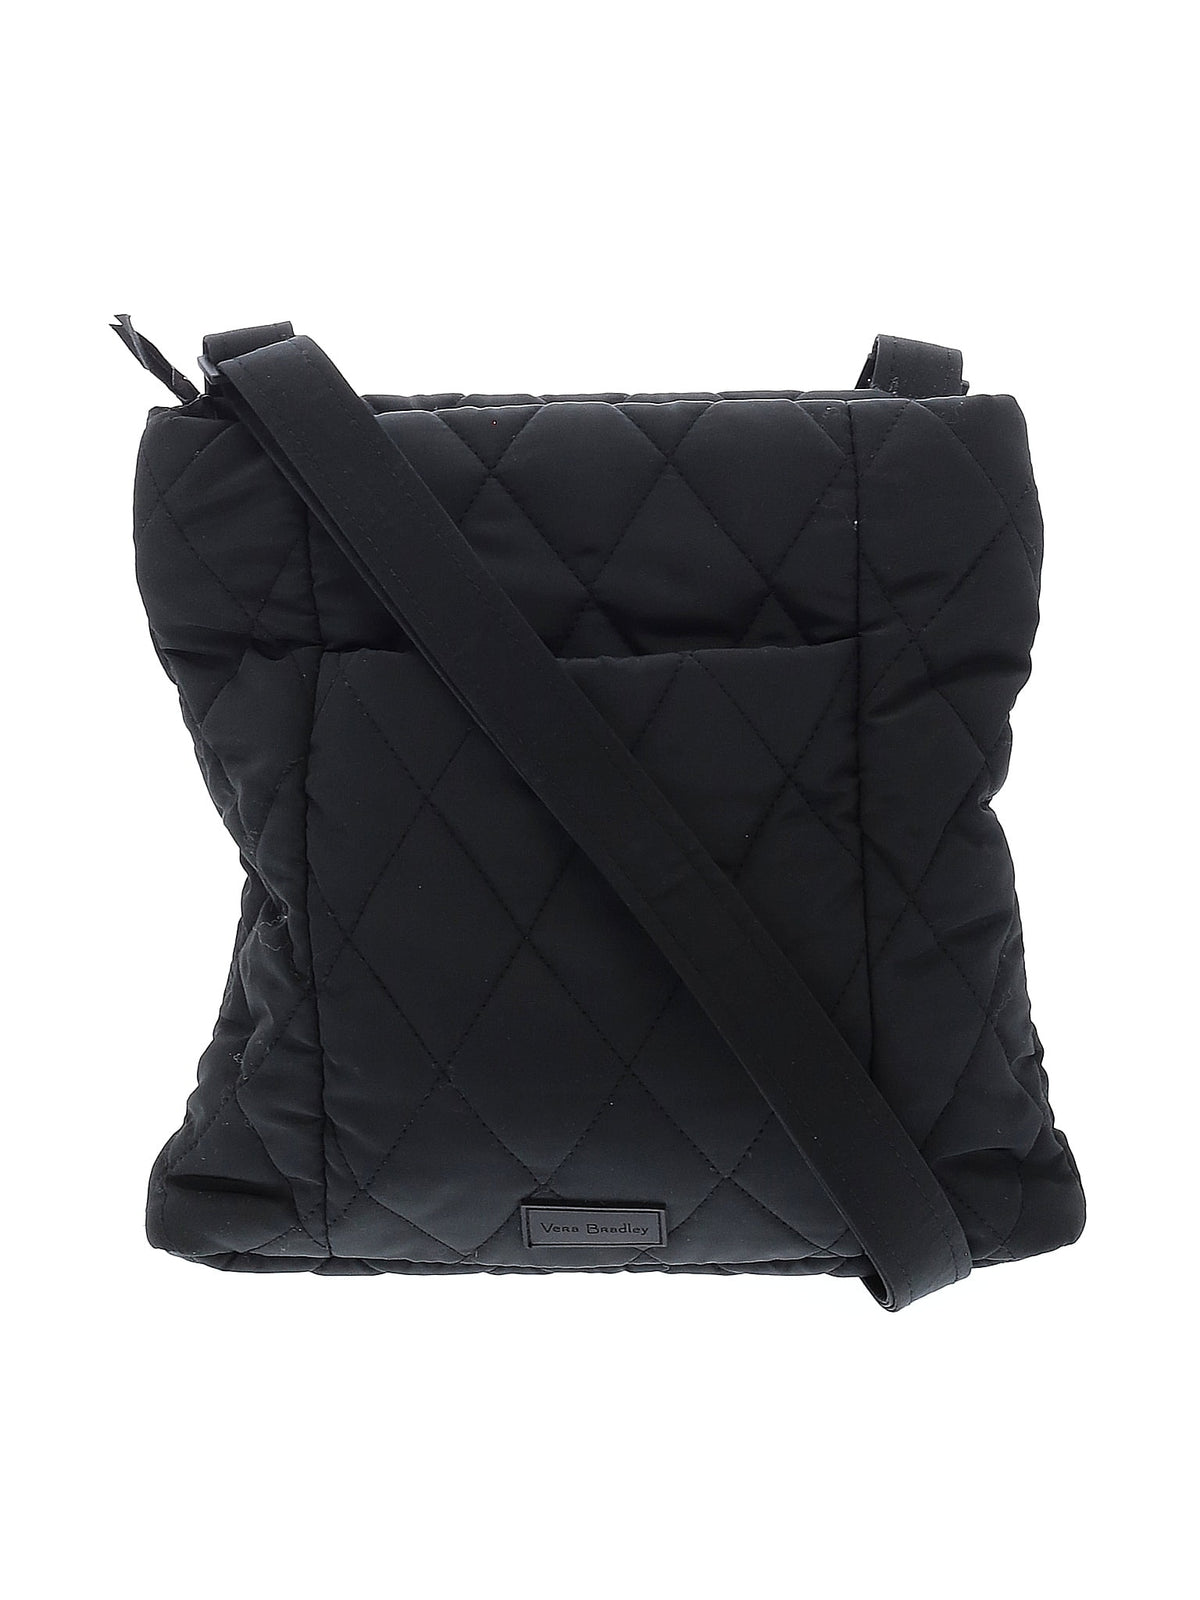 Crossbody Bag size - One Size